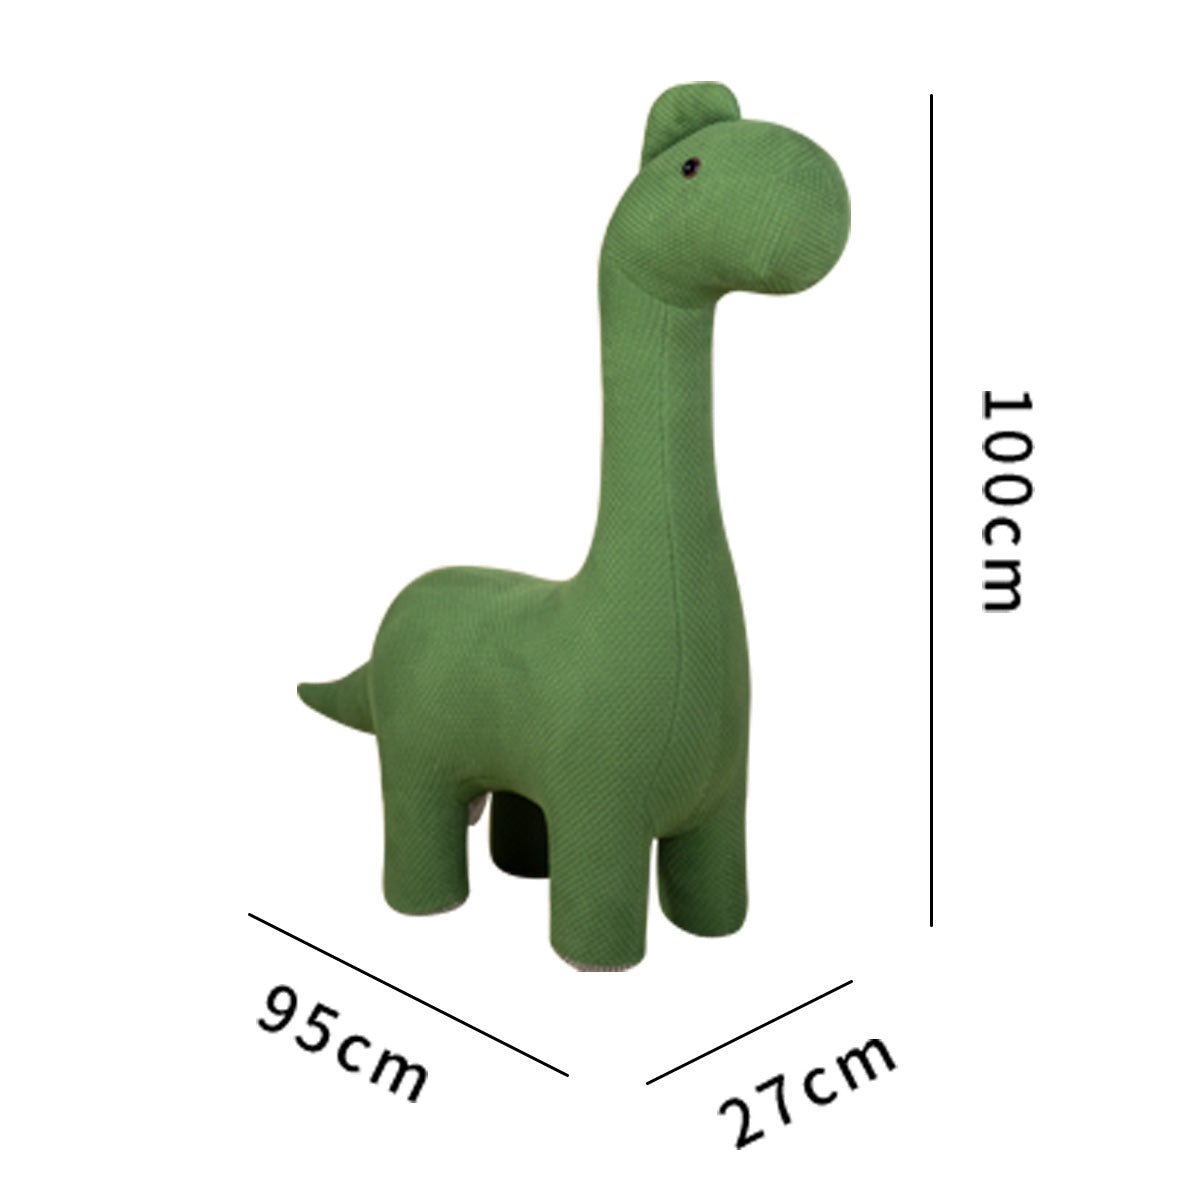 Knitted Green Dinosaur Stool - 0cm